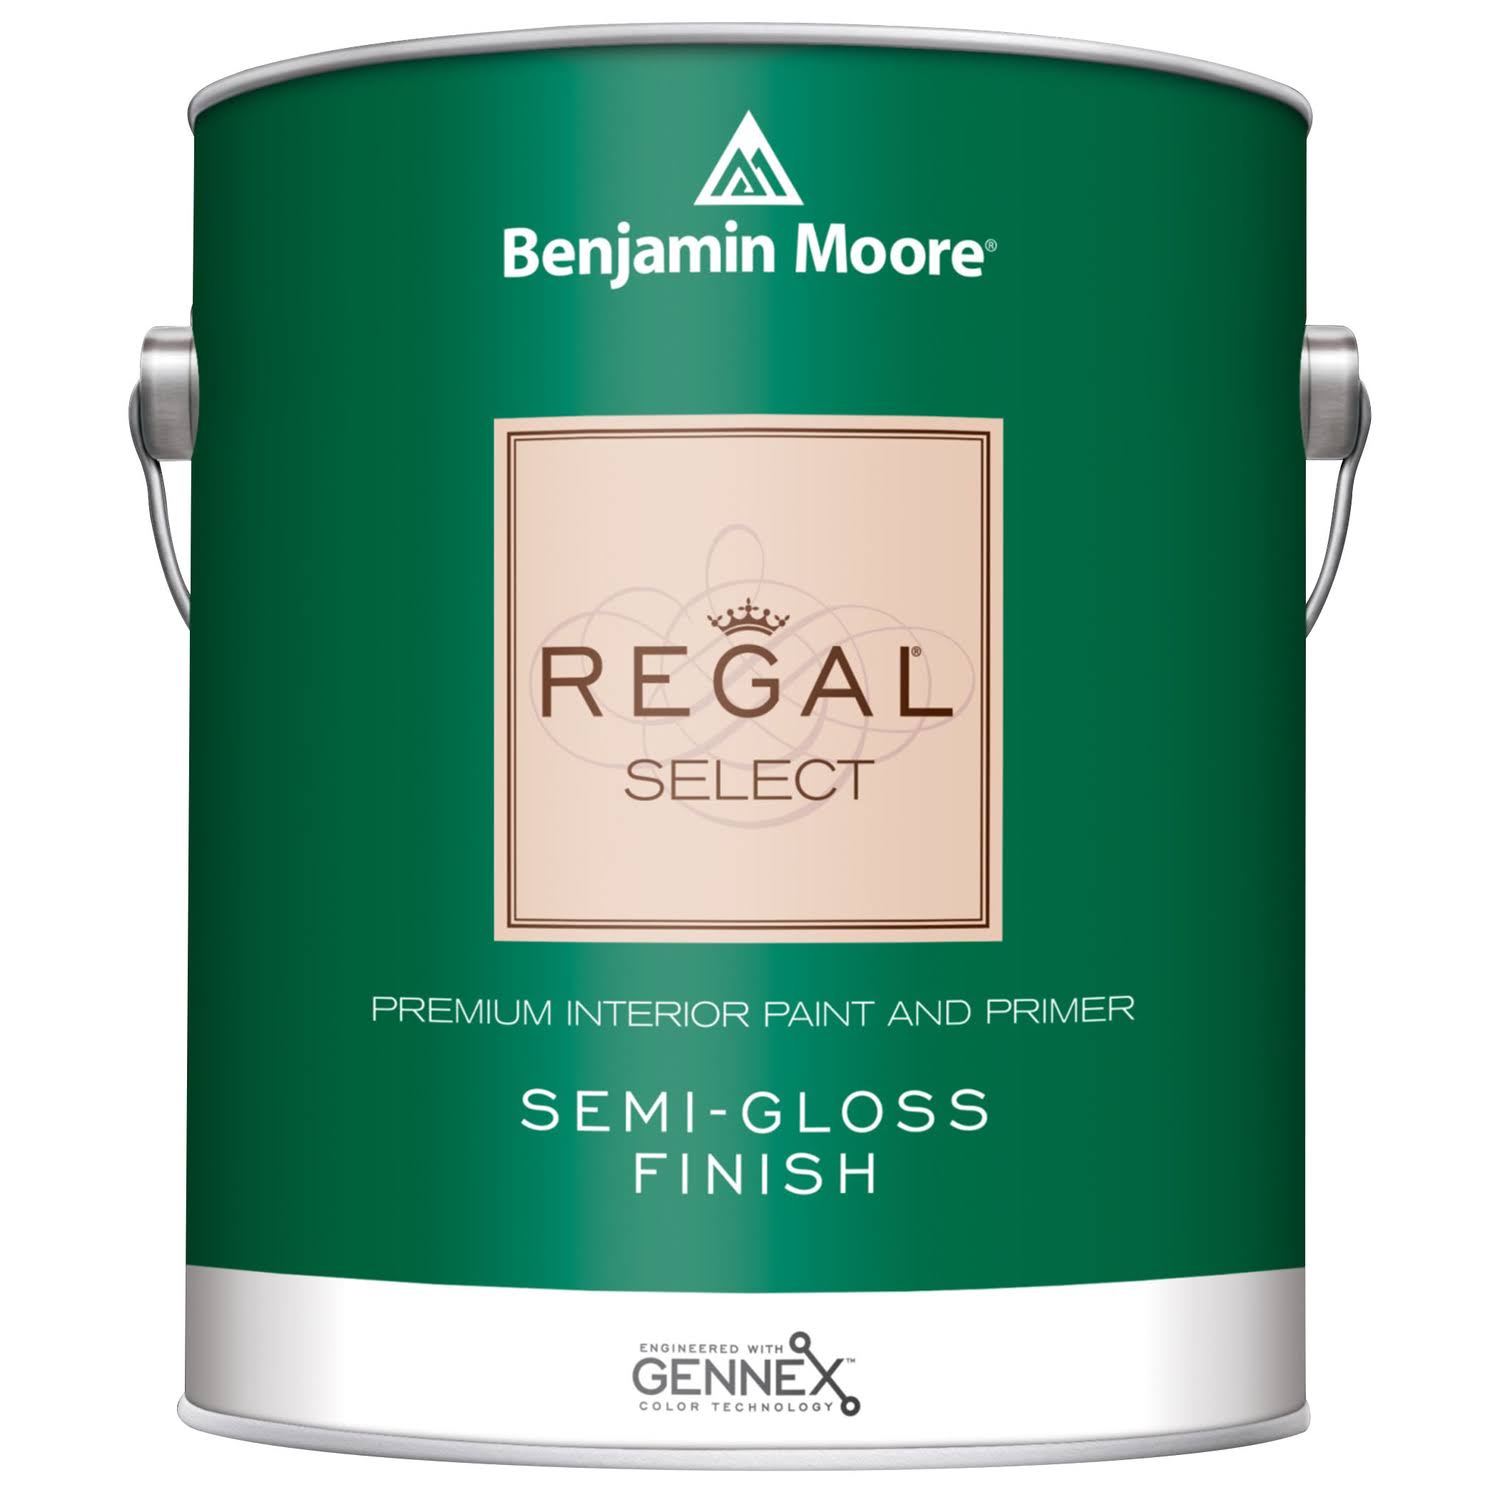 Benjamin Moore Regal Select Interior Paint Semi-Gloss